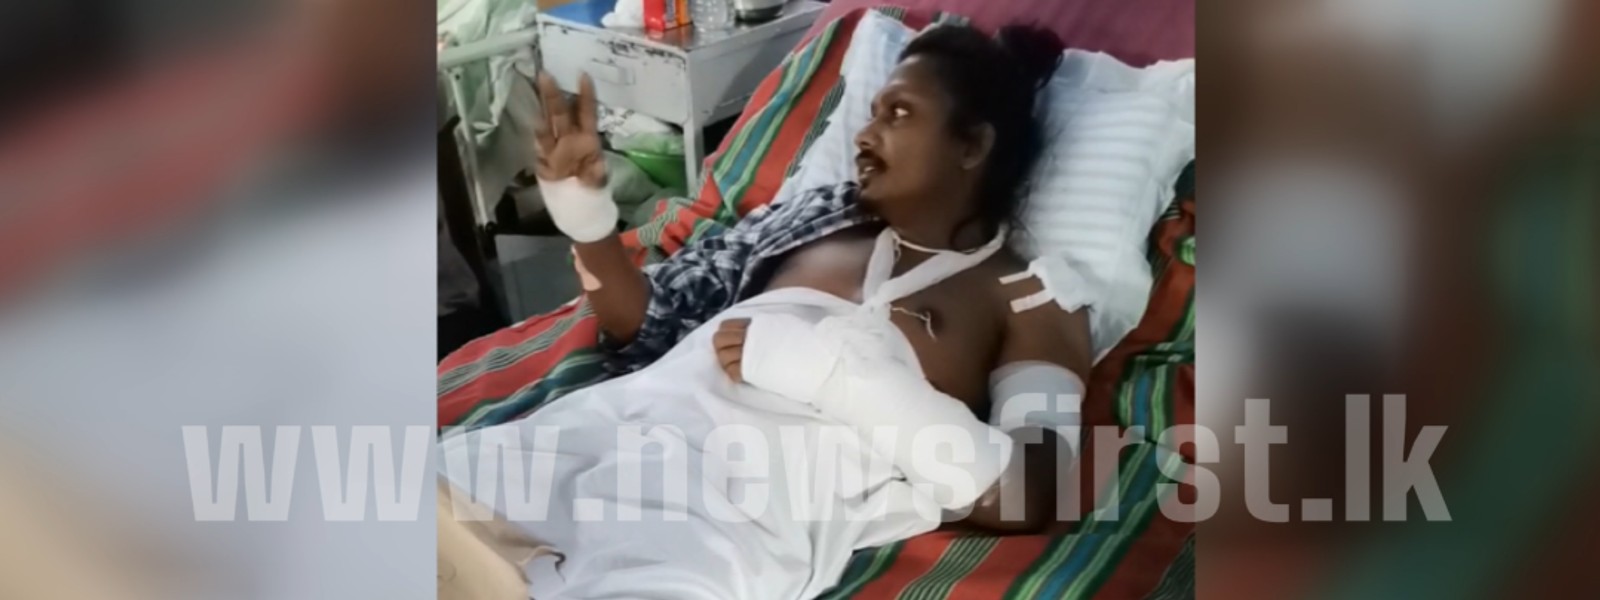 Still no arrests over Dilan Senanayake stabbing